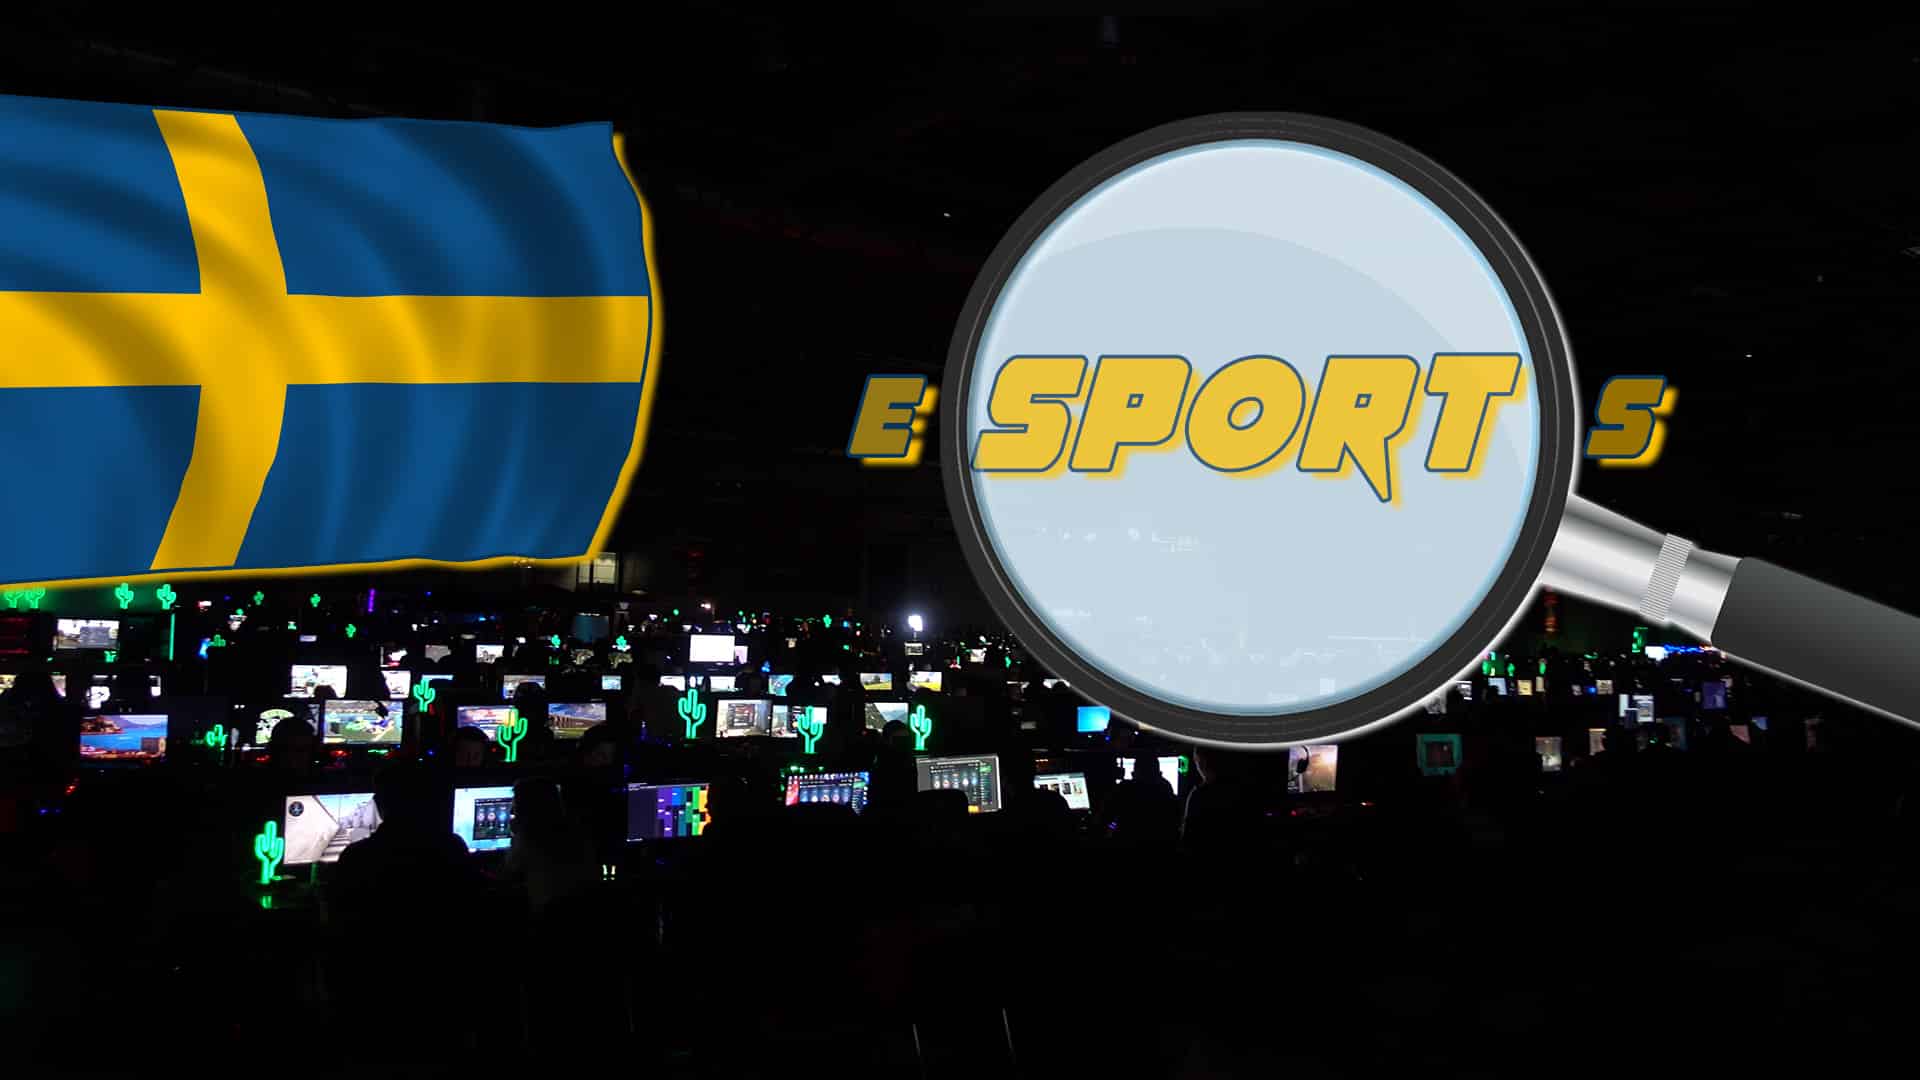 schweden eSport header